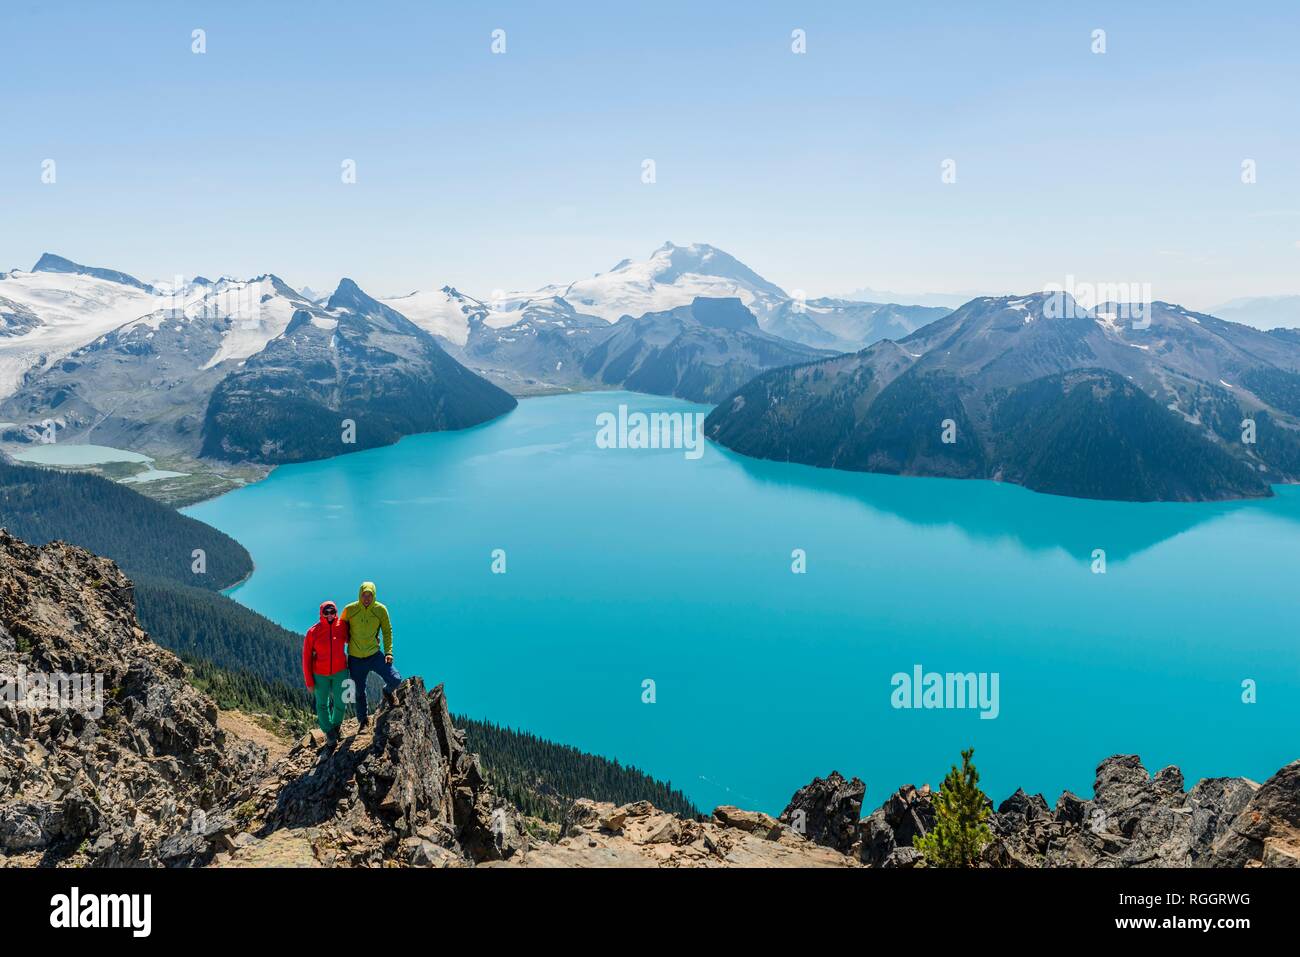 View from Panorama Ridge trail, two hikers on a rock, Garibaldi Lake, turquoise glacial lake, Guard Mountain and Deception Peak Stock Photo